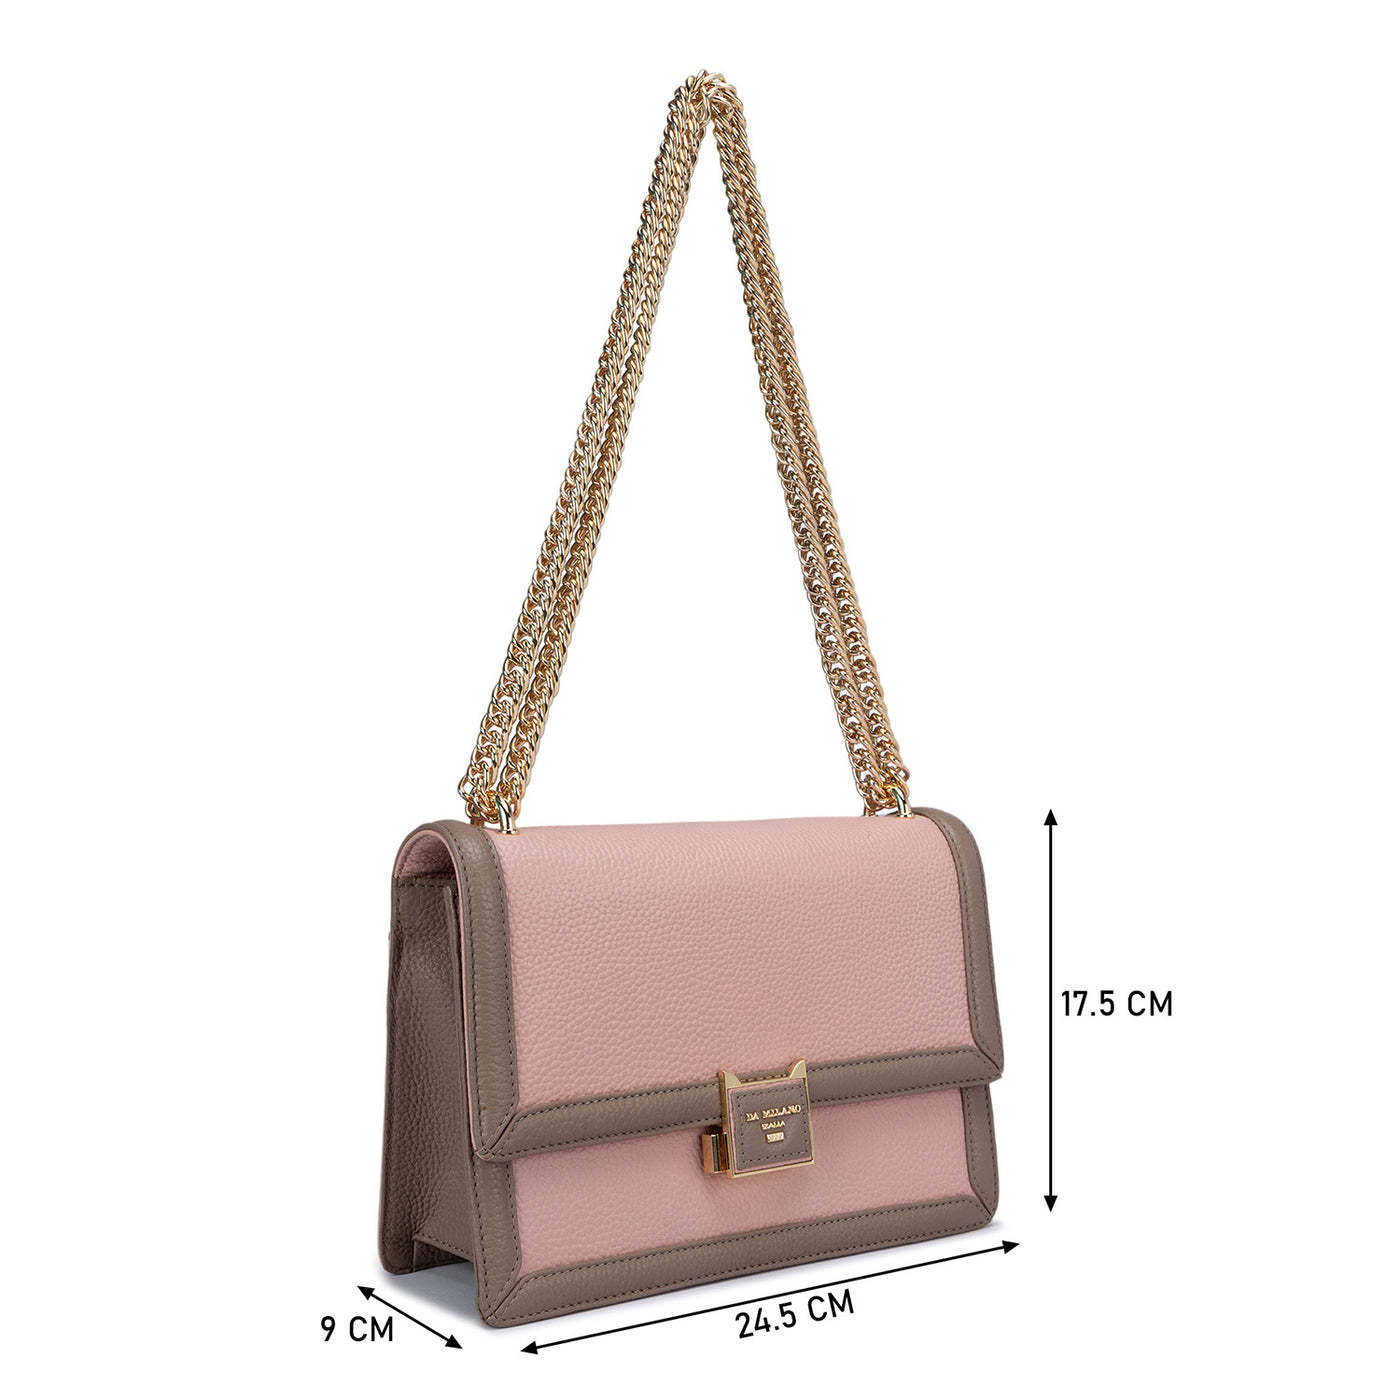 Medium Wax Leather Shoulder Bag - Baby Pink